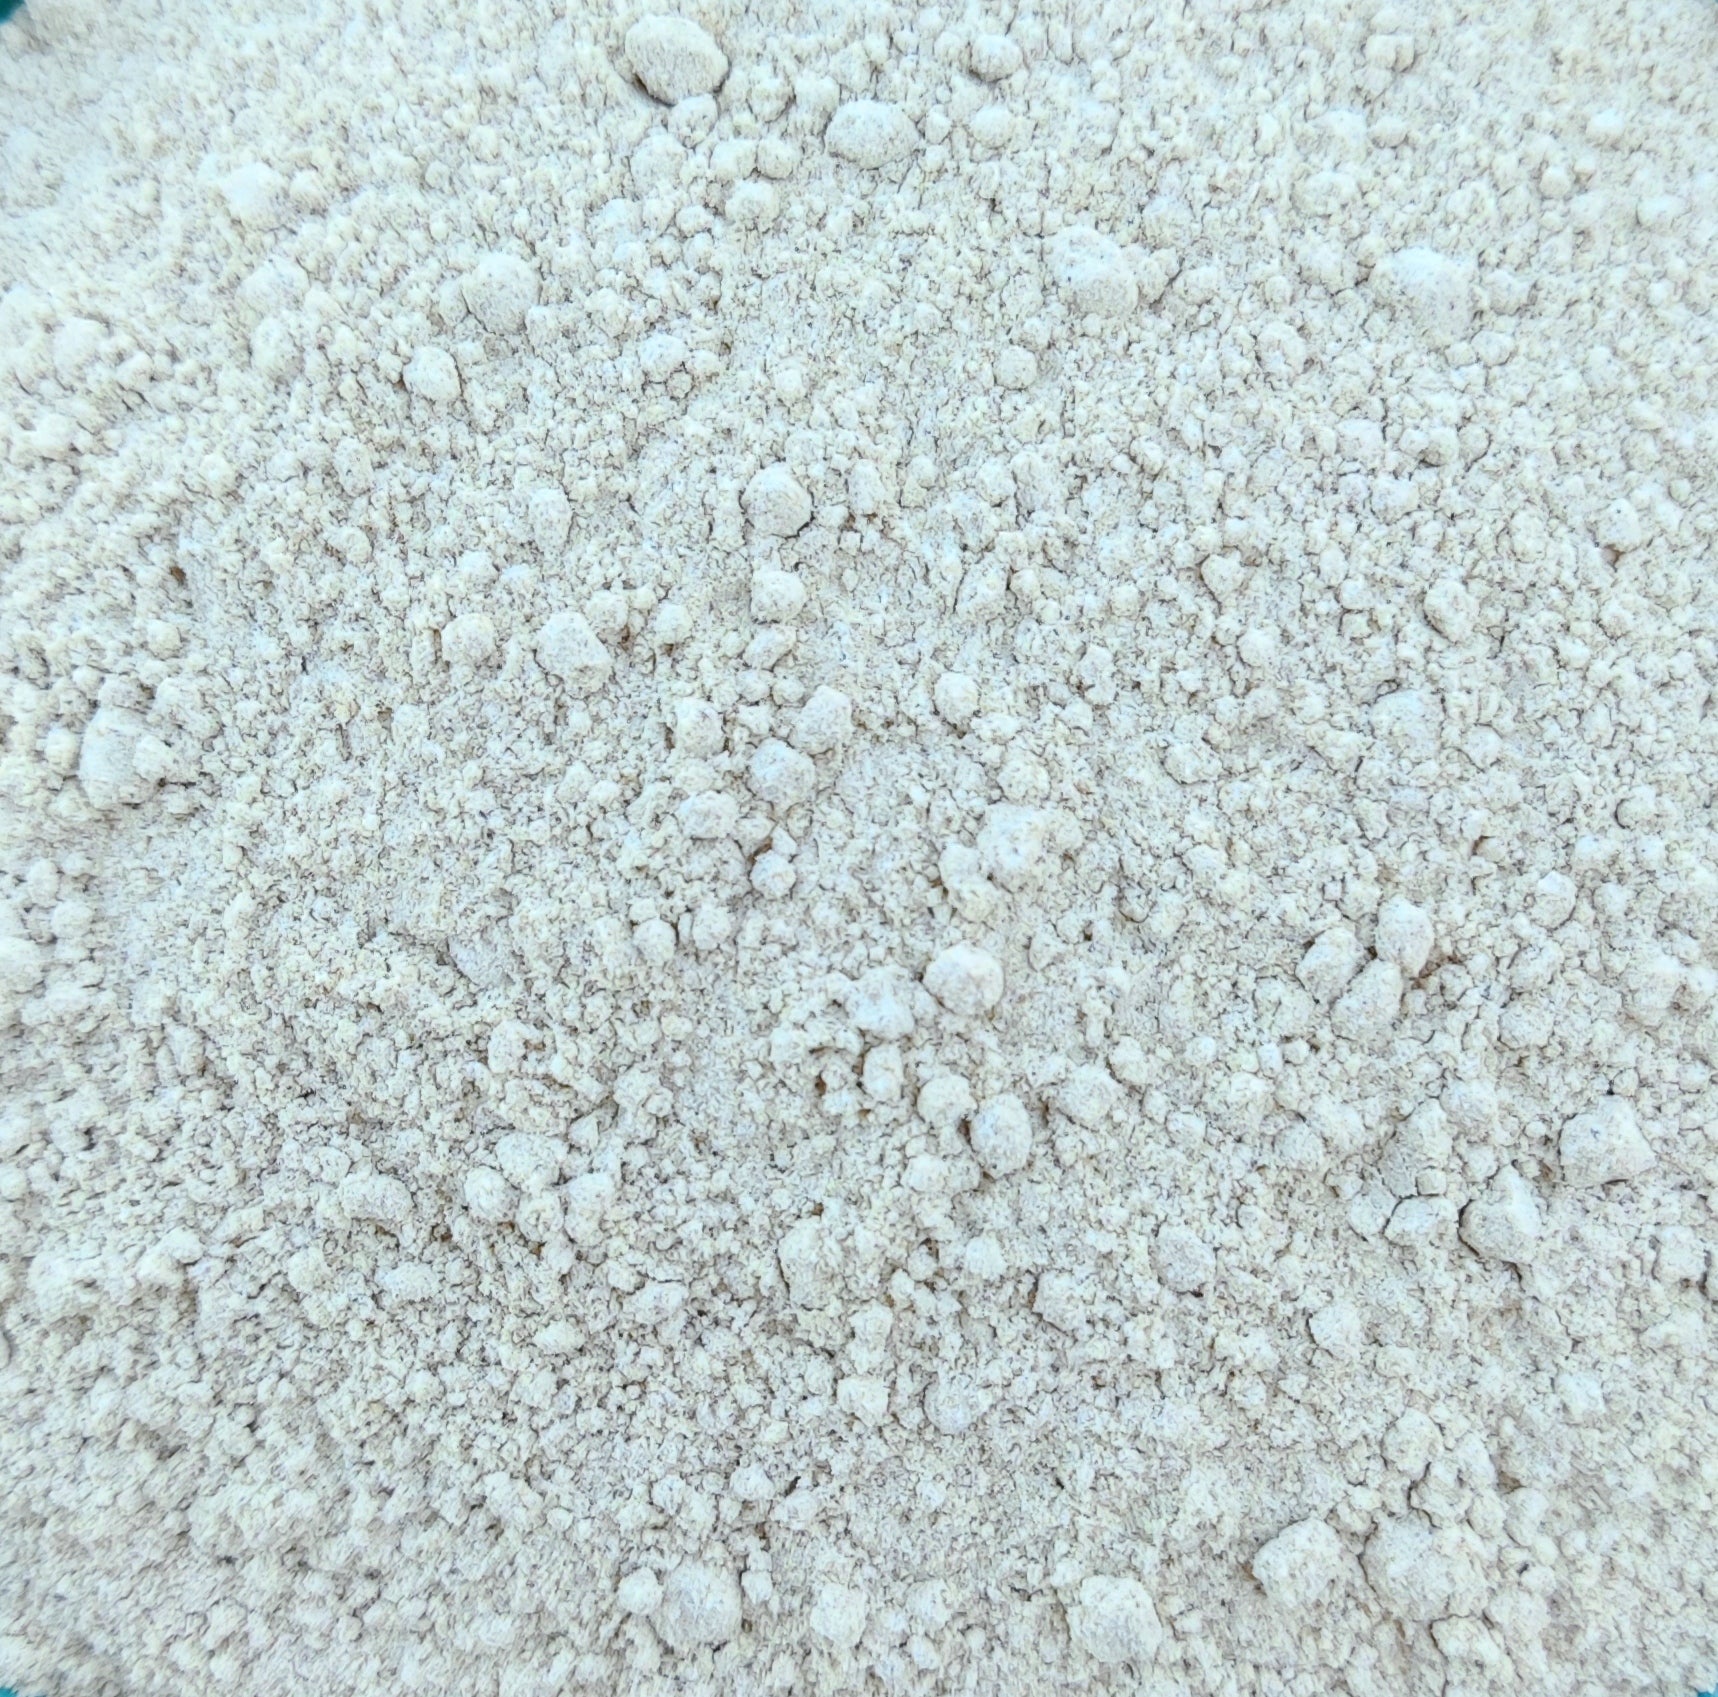 Maca Powder | Organic